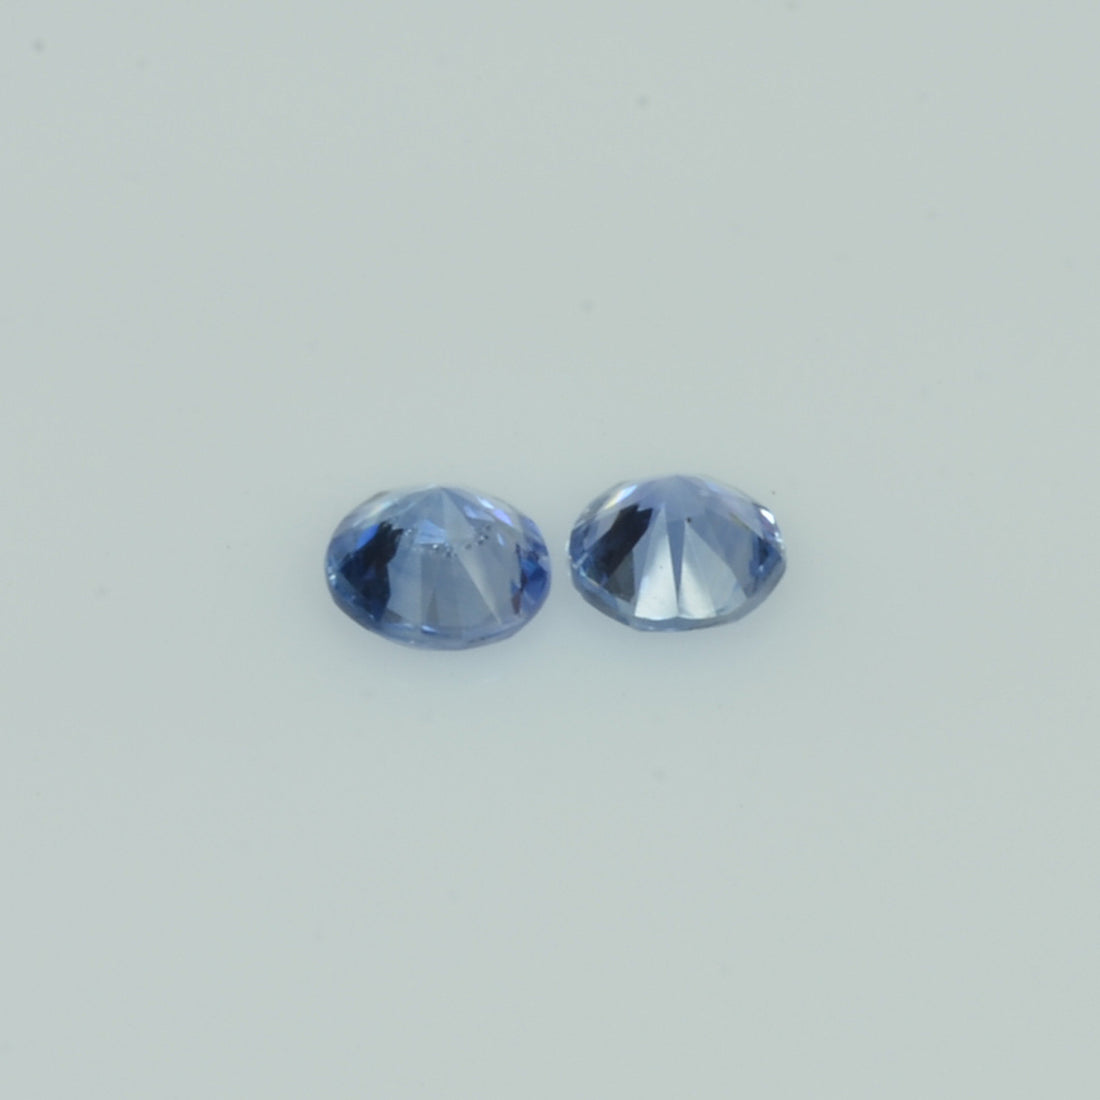 4.2 mm Natural Blue Sapphire Loose Pair Gemstone Round Cut - Thai Gems Export Ltd.